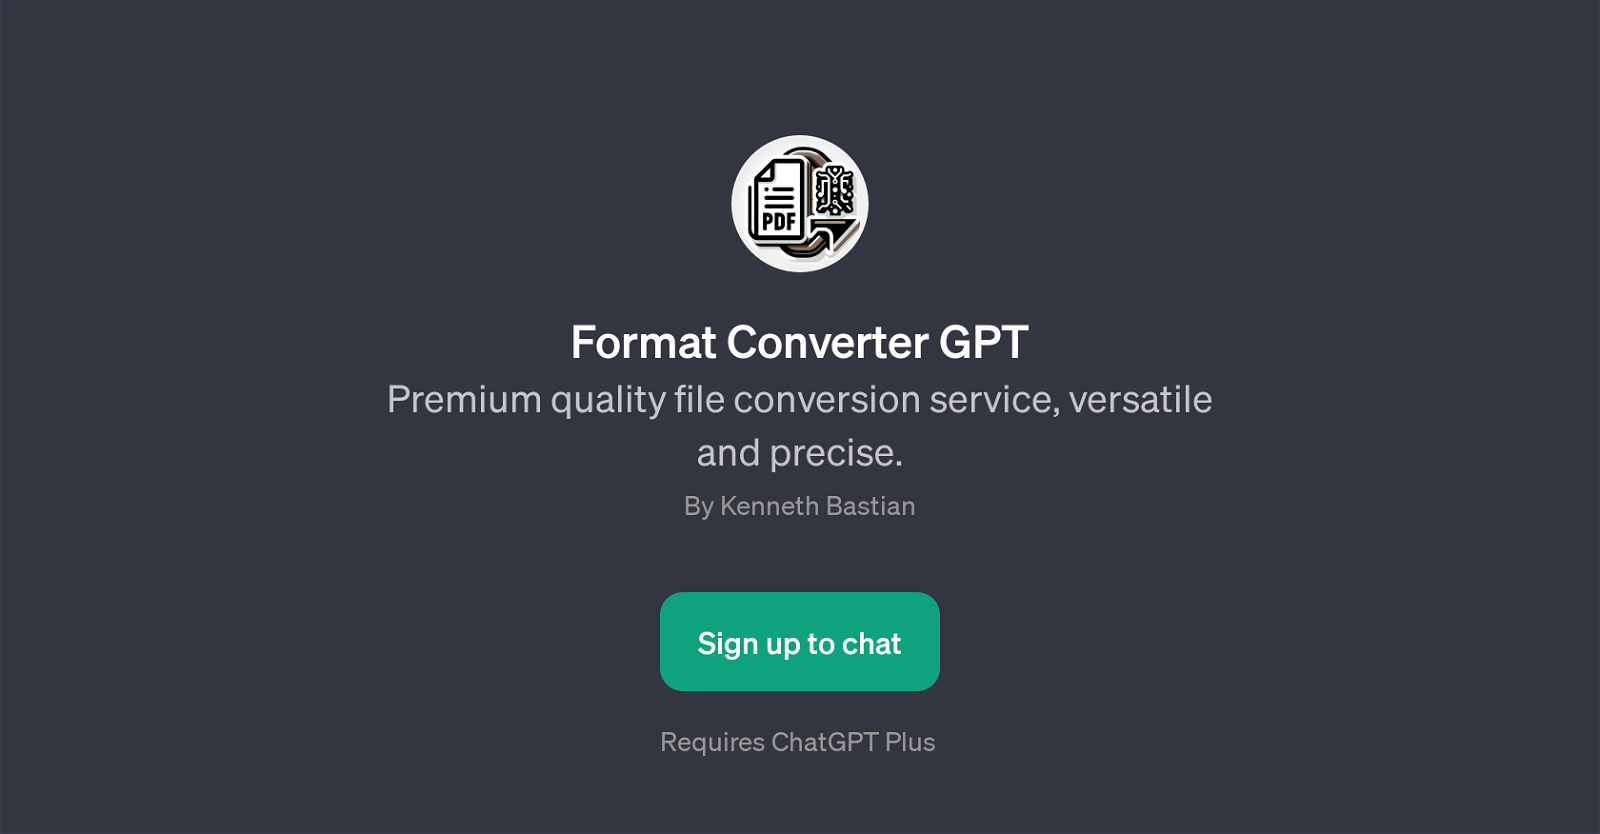 Format Converter GPT website